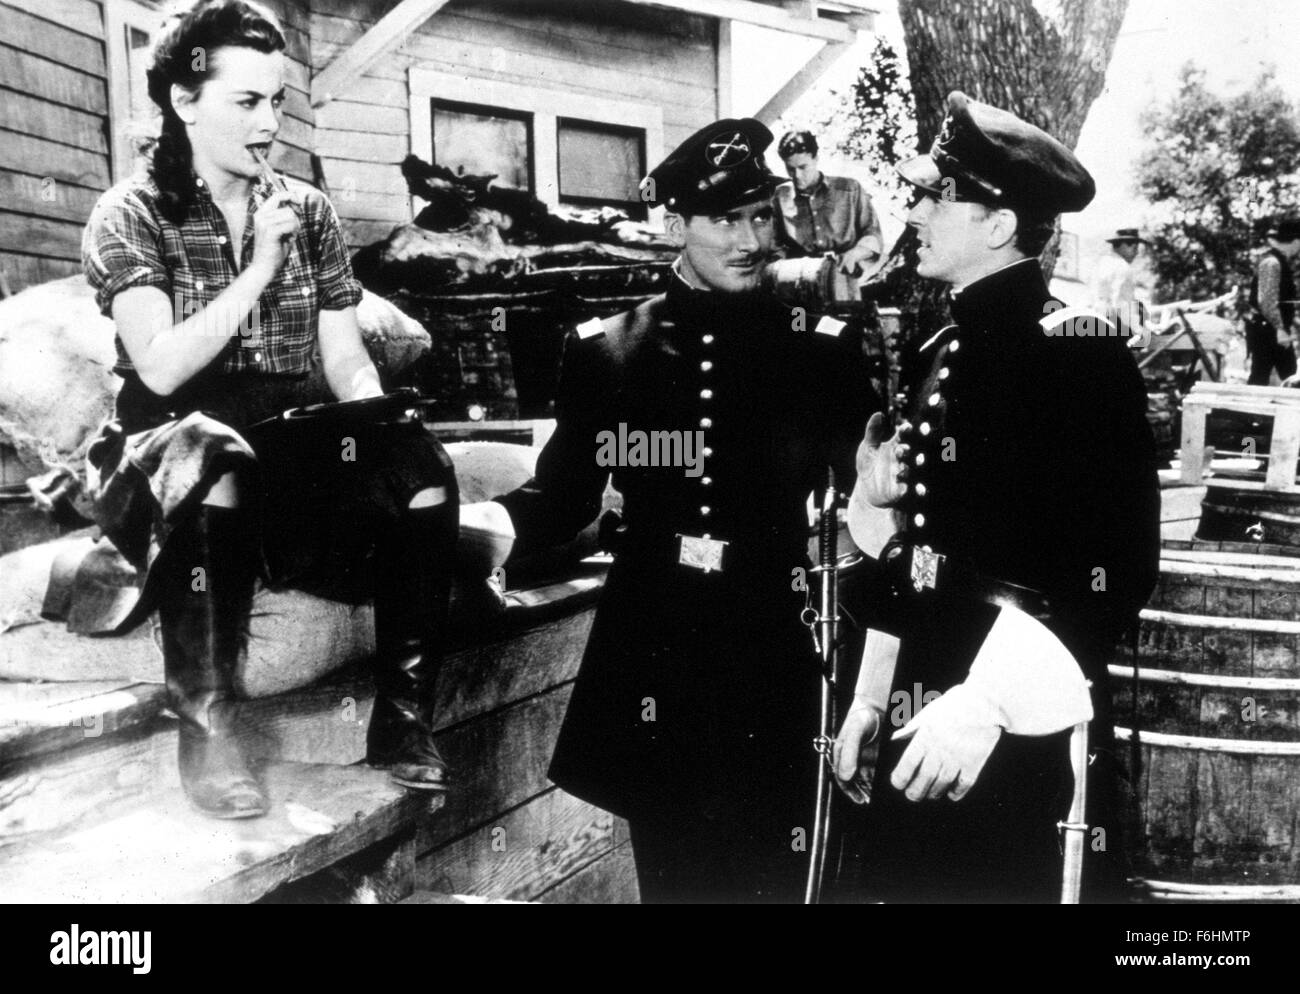 1940, Film Title: SANTA FE TRAIL, Director: MICHAEL CURTIZ, Studio: WARNER, Pictured: MICHAEL CURTIZ, OLIVIA DeHAVILLAND, ERROL FLYNN, RONALD REAGAN, CHECKED SHIRT, FLANNELETTE, BOOTS, SOLDIERS, MILITARY UNIFORM, SITTING, CHEWING, FLIRTING, DISINTERESTED, BOY MEETS GIRL, WOMEN (BUTCH), WOMEN (MASCULINE), WOMEN (TOMBOY). (Credit Image: SNAP) Stock Photo